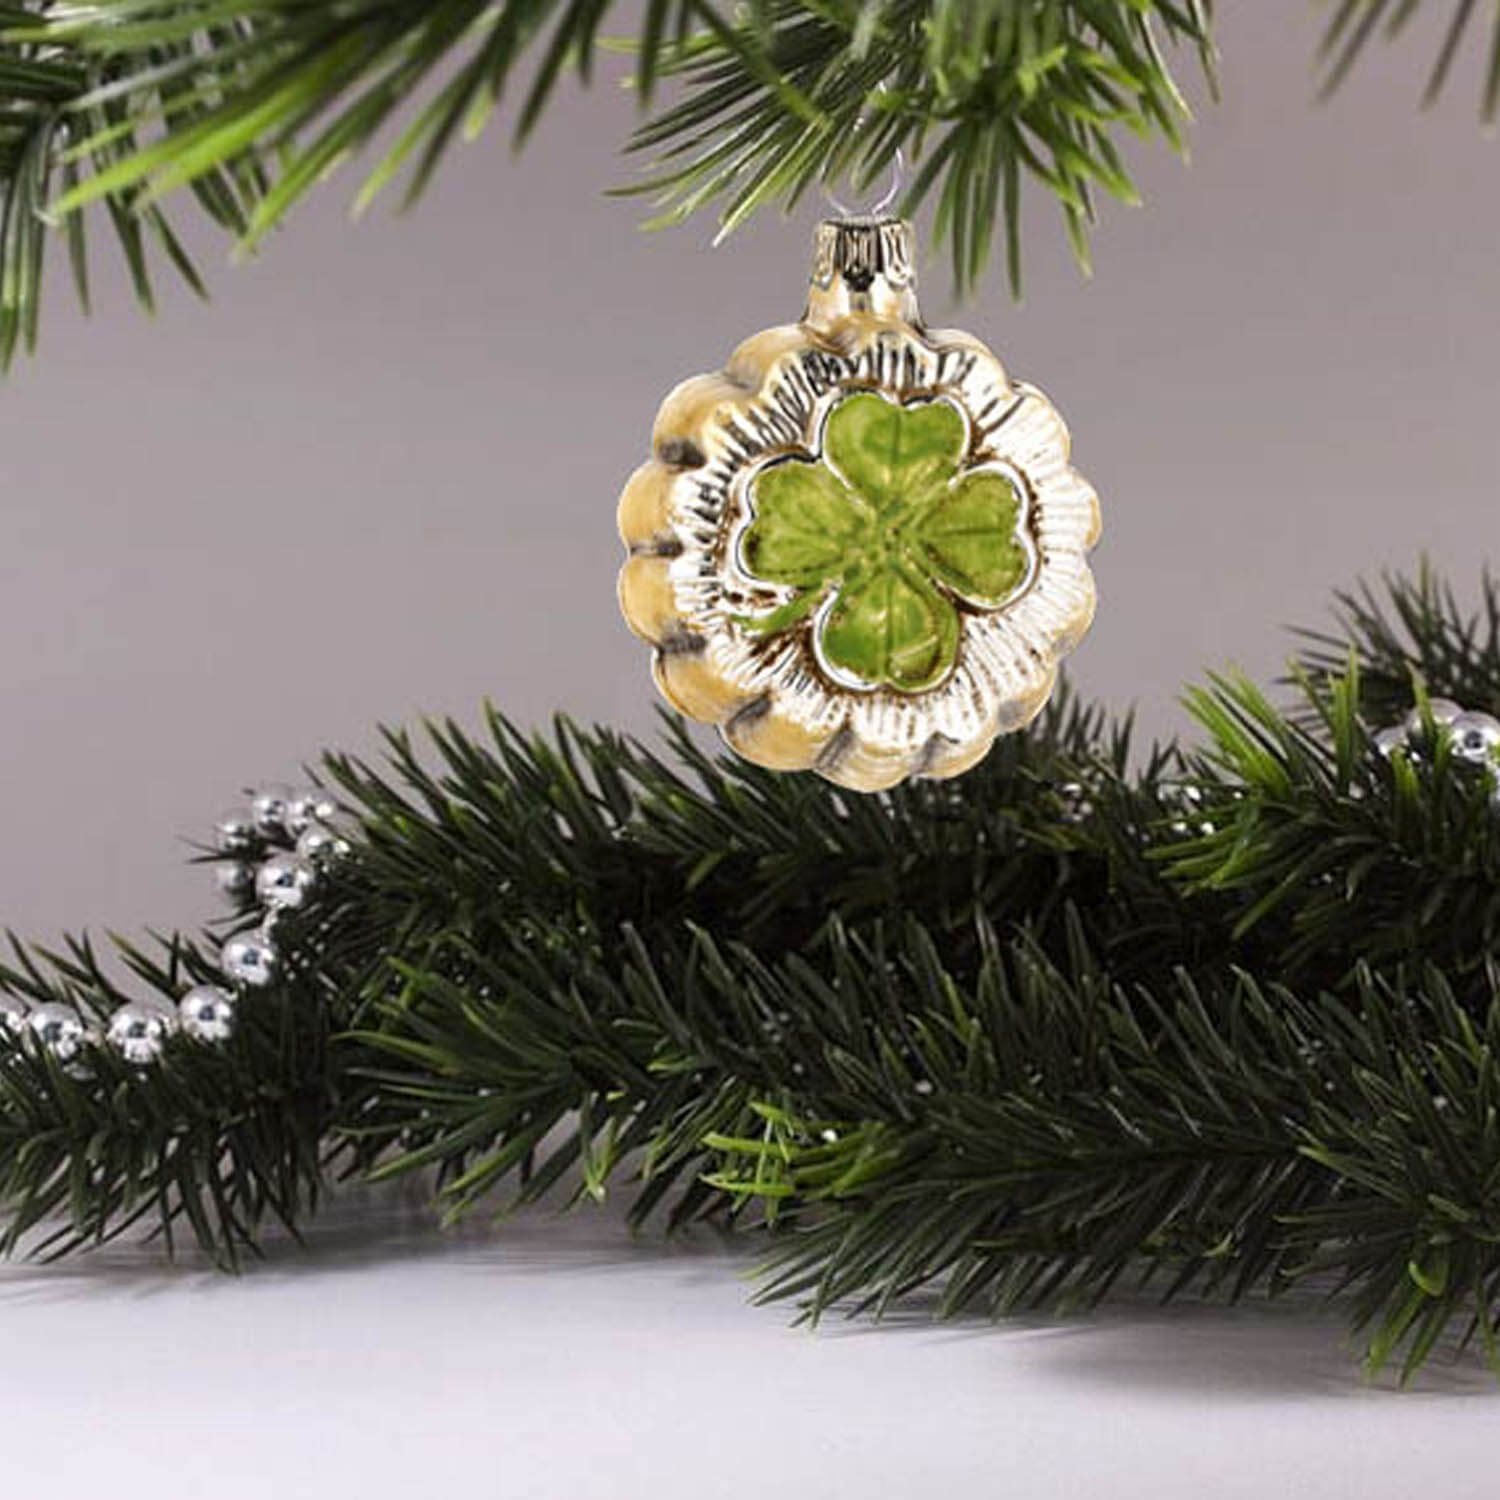 MAROLIN® - Miniature glass ornament "cloverleaf"